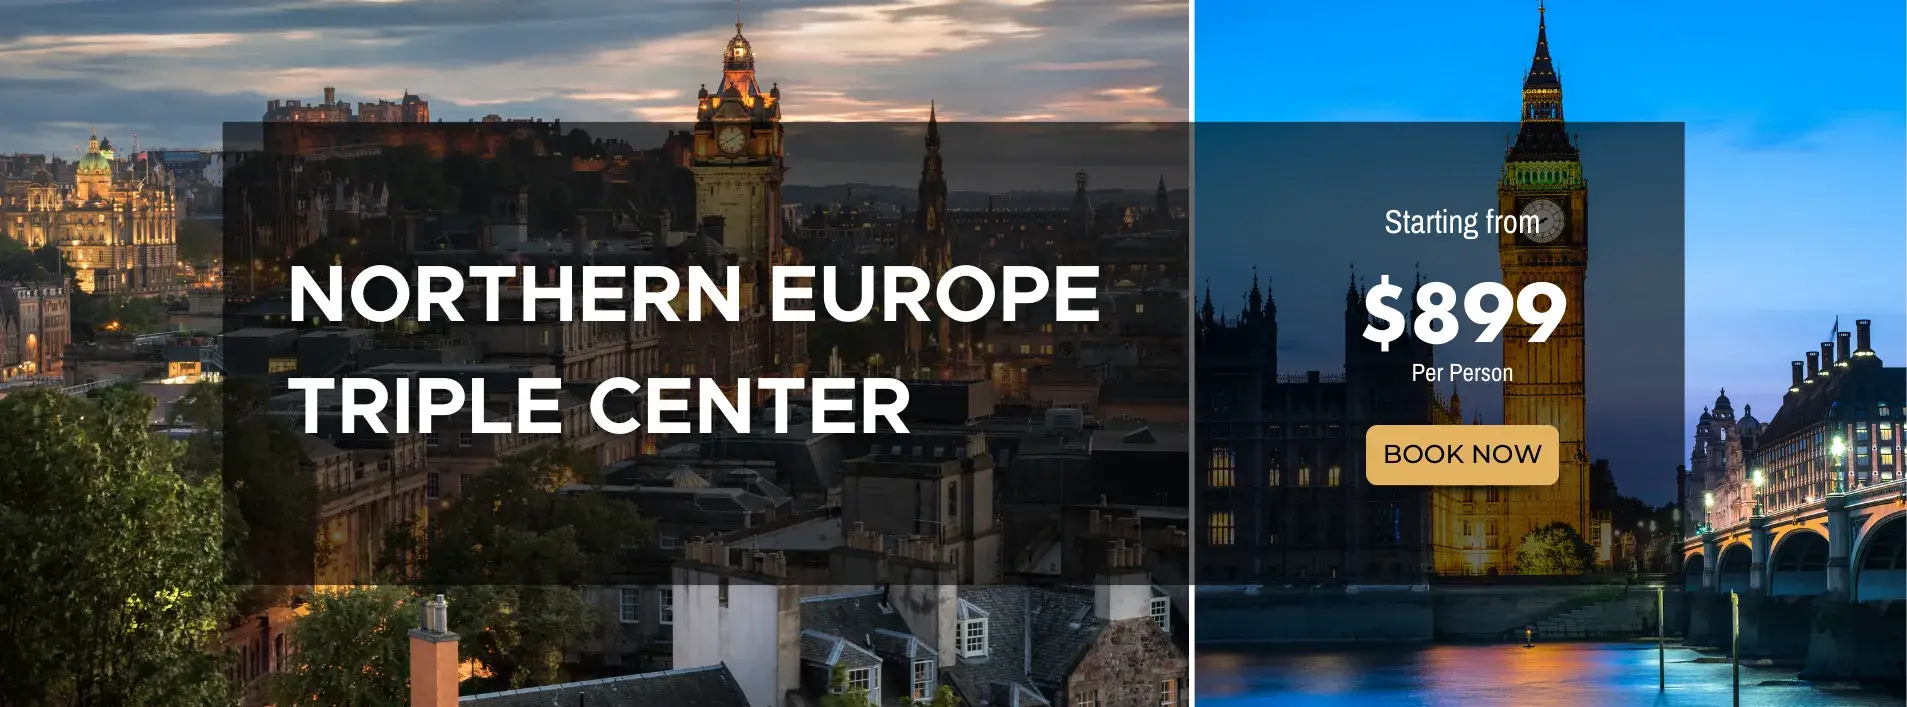 Northern Europe Triple Center Getaway W/Air